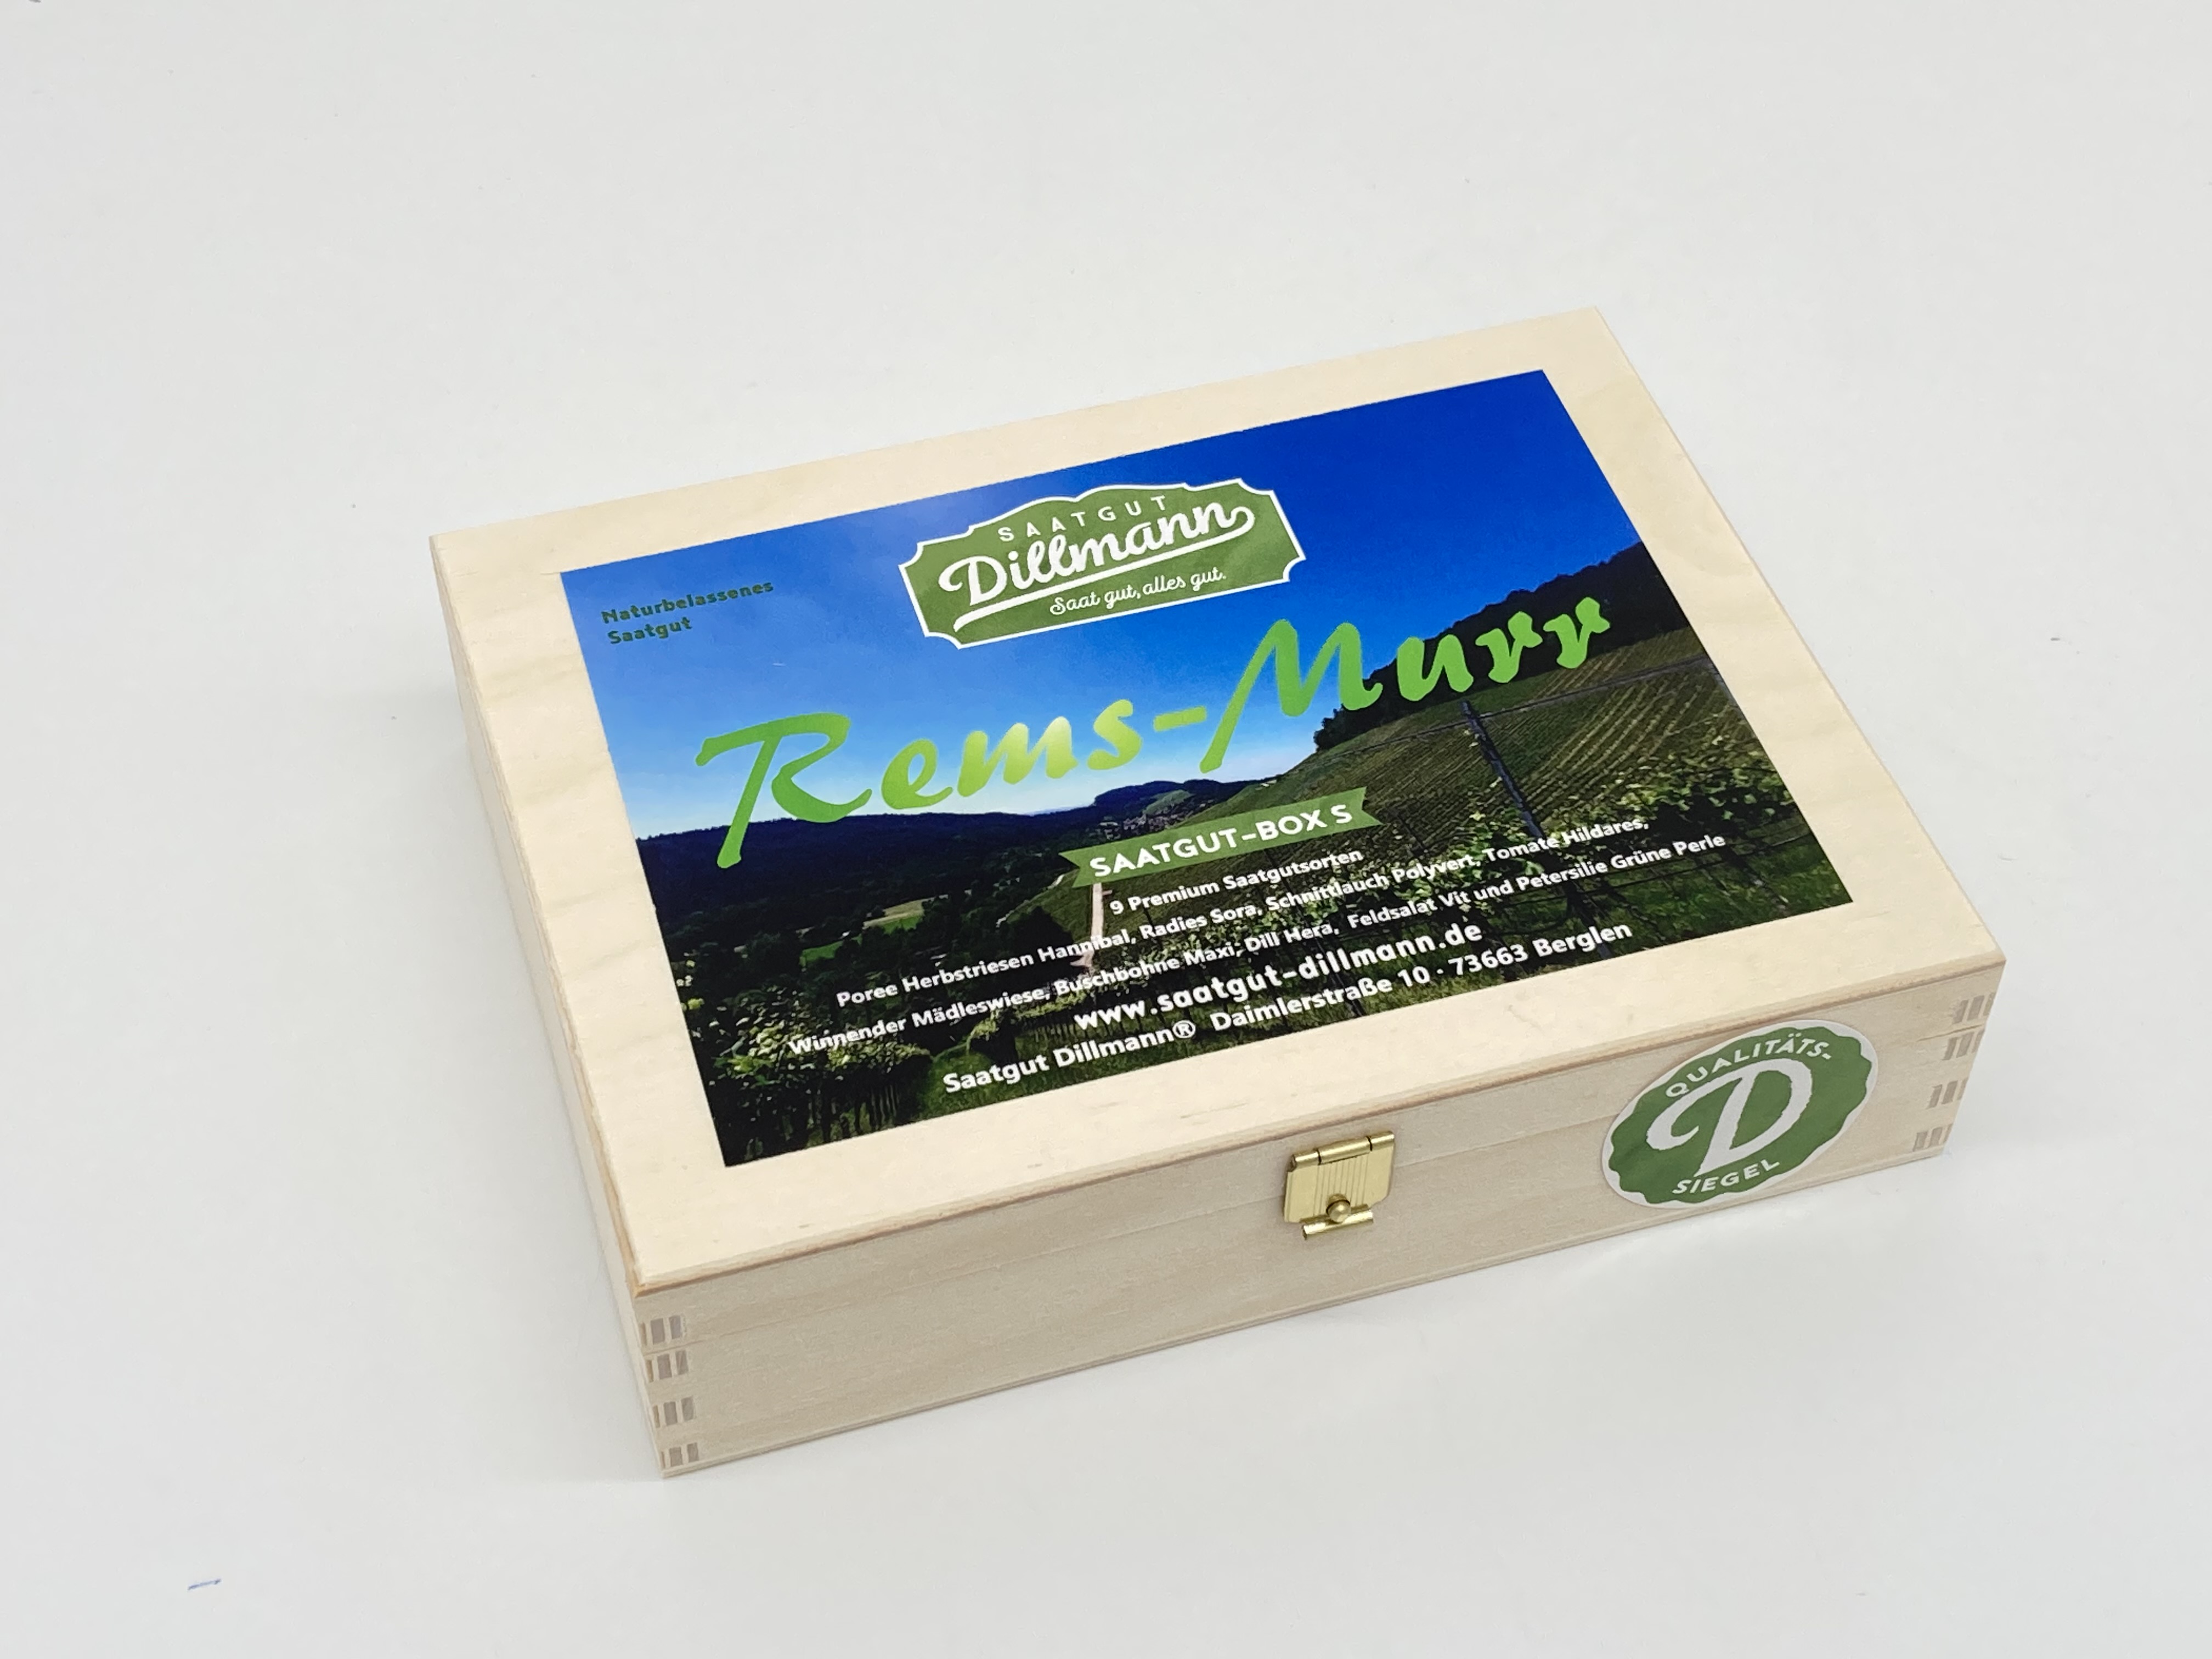 Rems-Murr Saatgut-Box S (Holzbox)